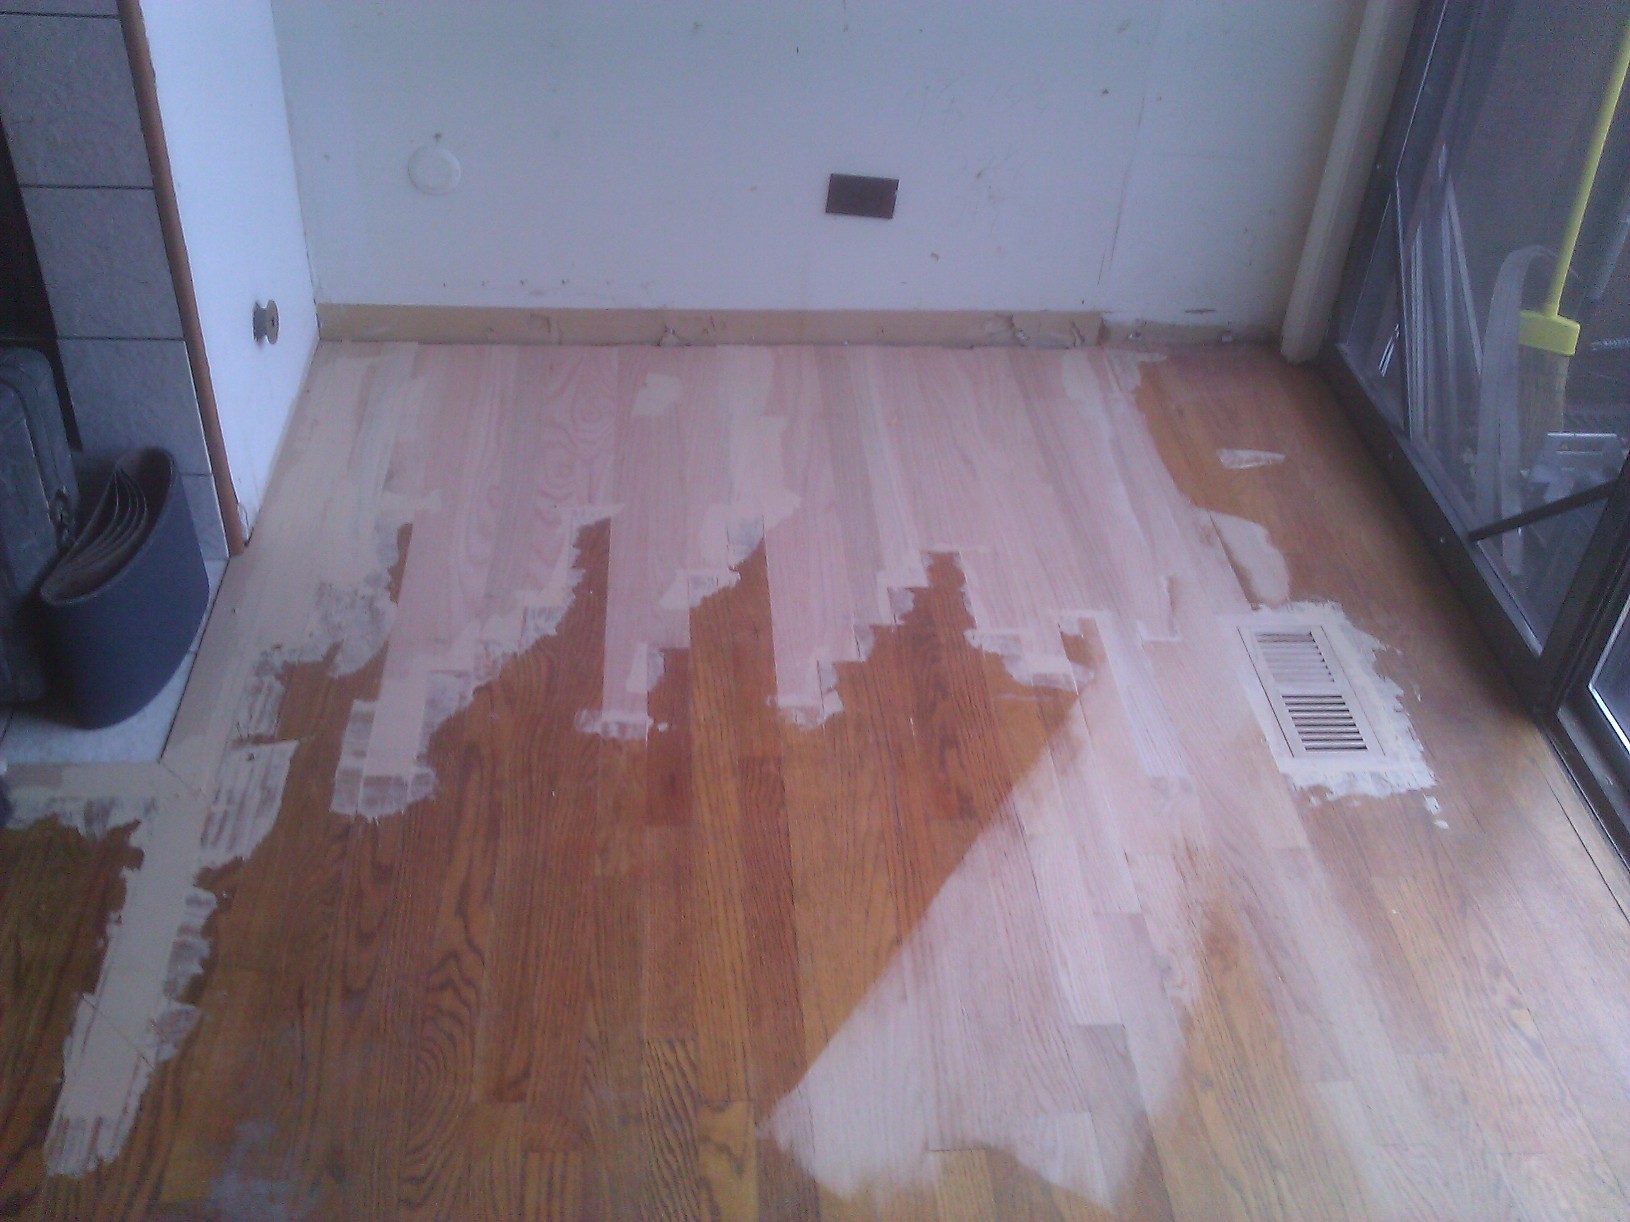 Repair Missing Floor Under A Cabinet In, Hardwood Floor Repair Chicago